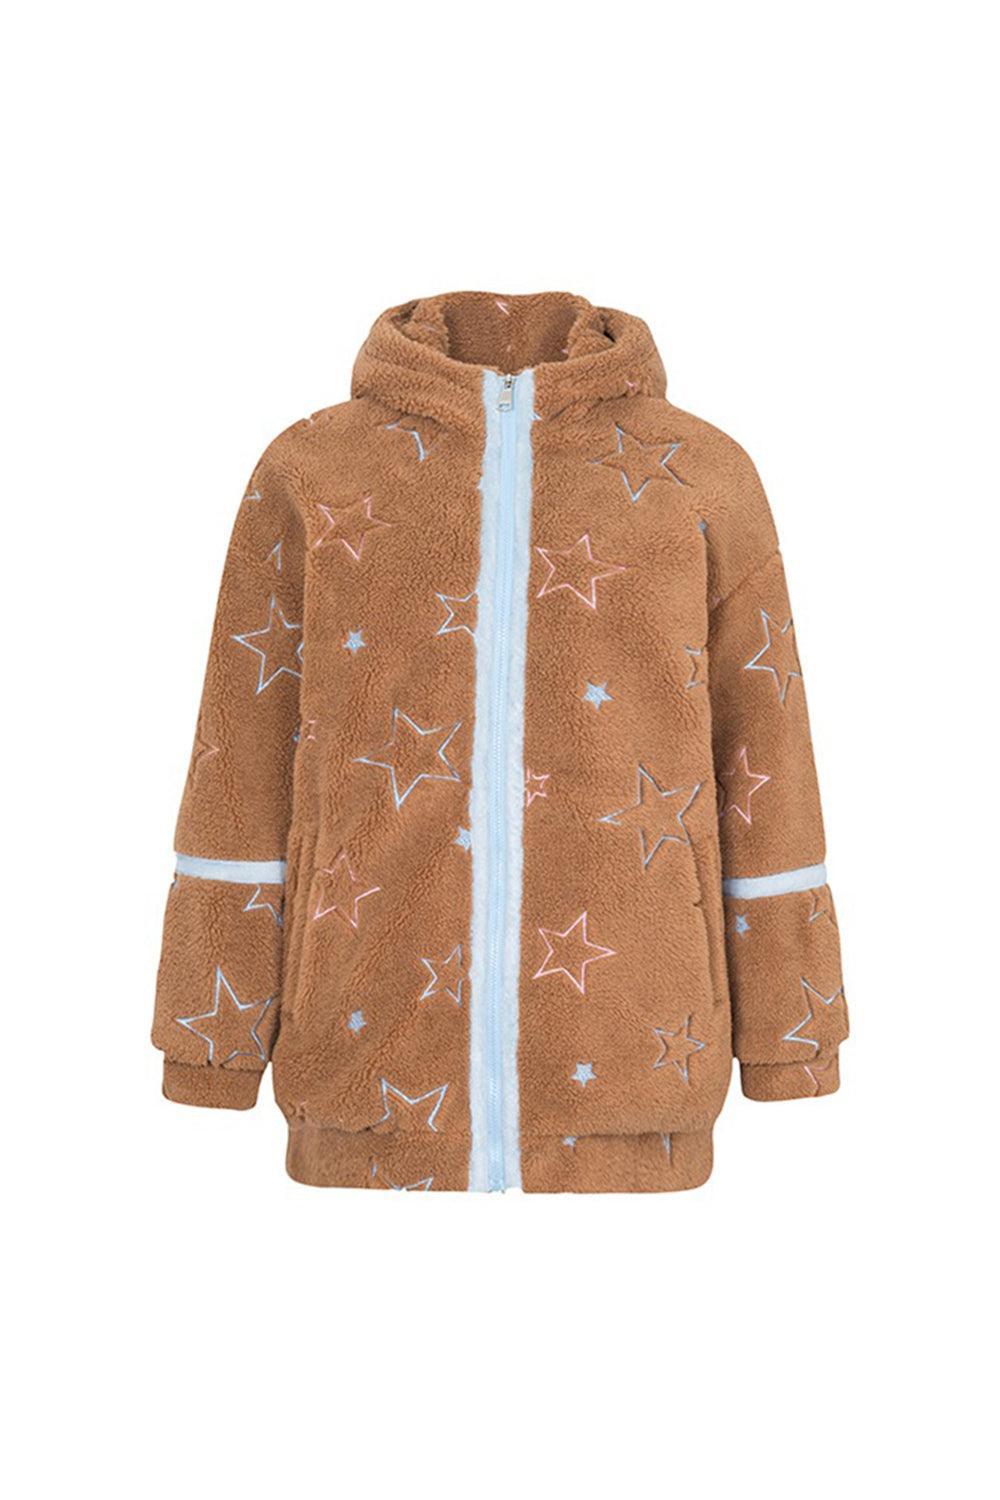 Brown Stellar Padded Winter Jacket with Ears - Pixie Rebels